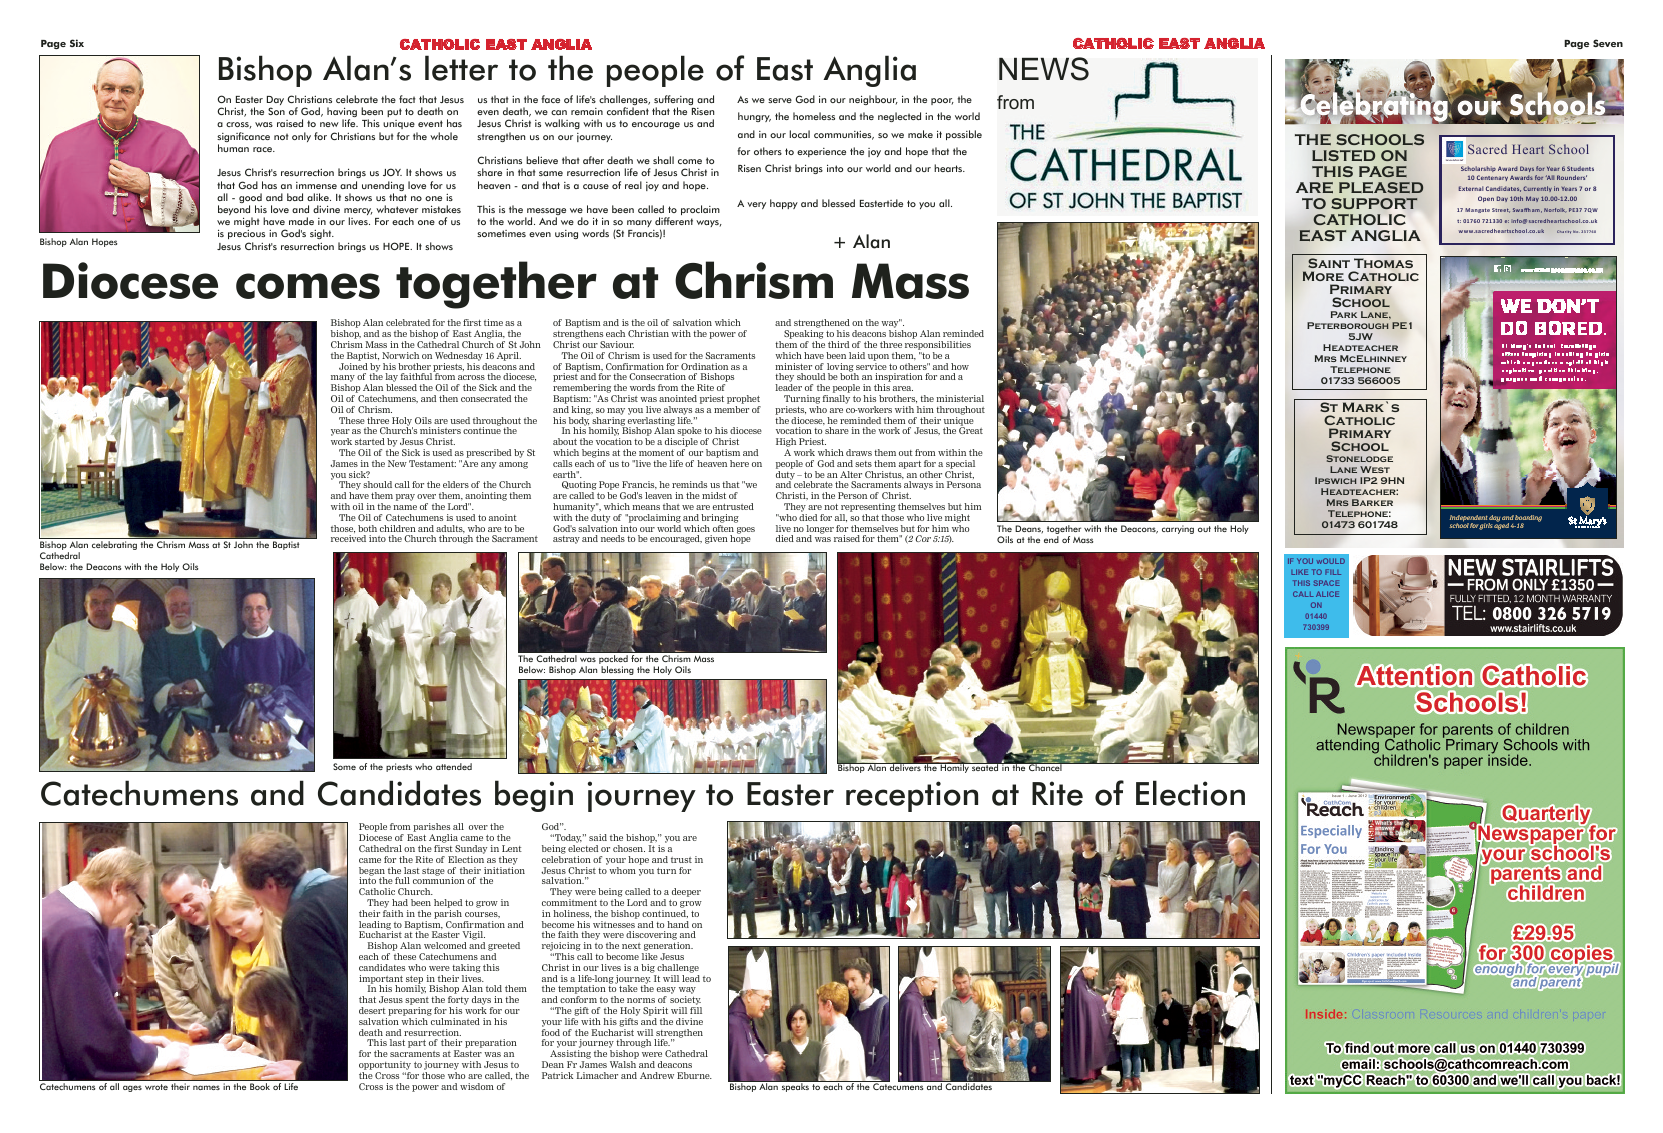 May 2014 edition of the Catholic East Anglia